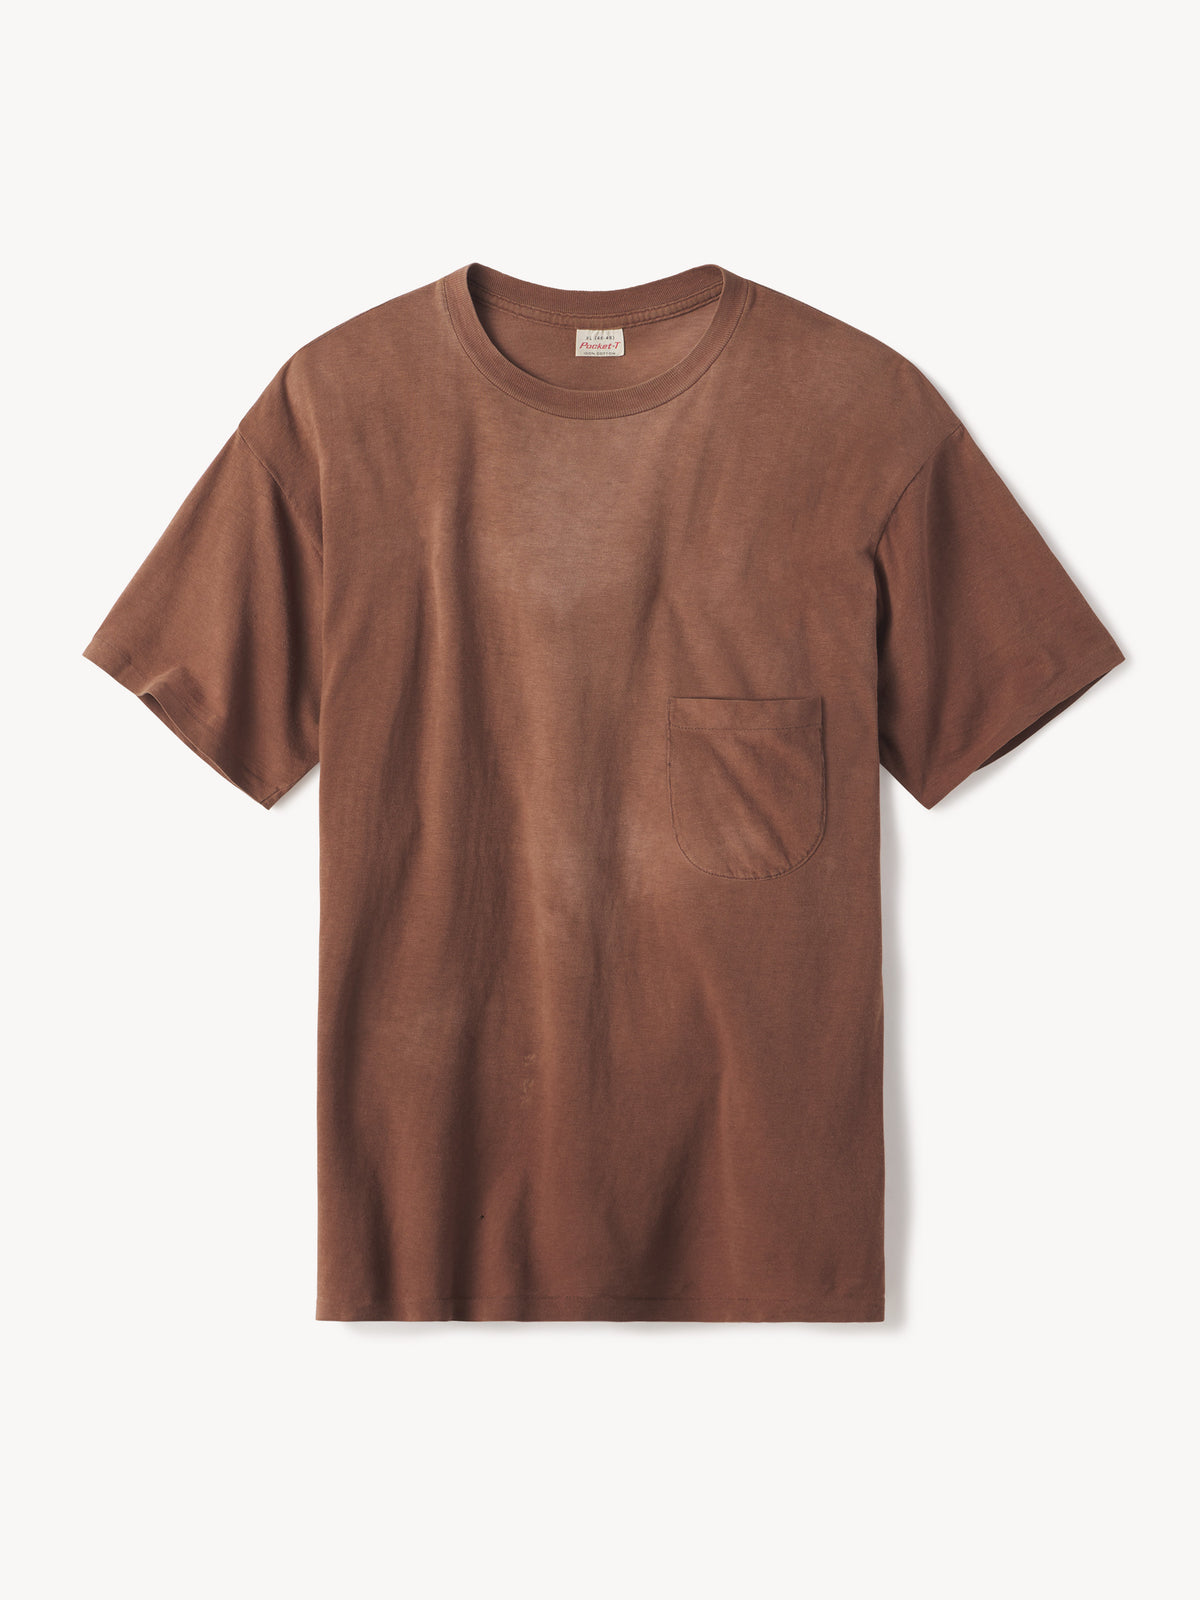 Pocket-T S/S Cotton Shirt - 0136 - Product Flat